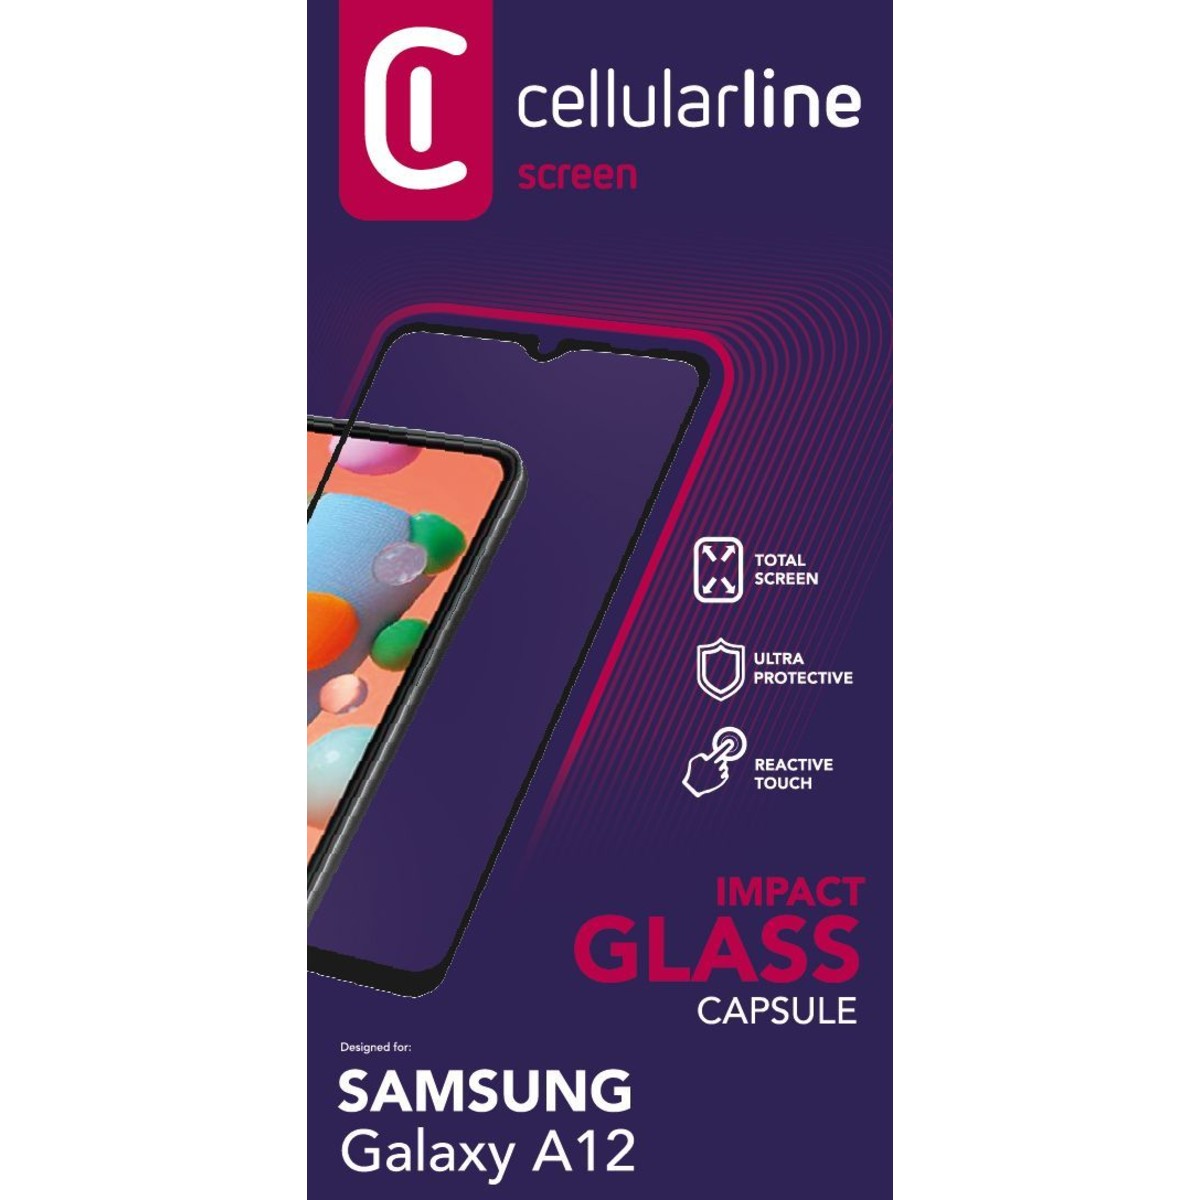 Schutzglas IMPACT GLASS CAPSULE für Samsung Galaxy A12/A32 5G